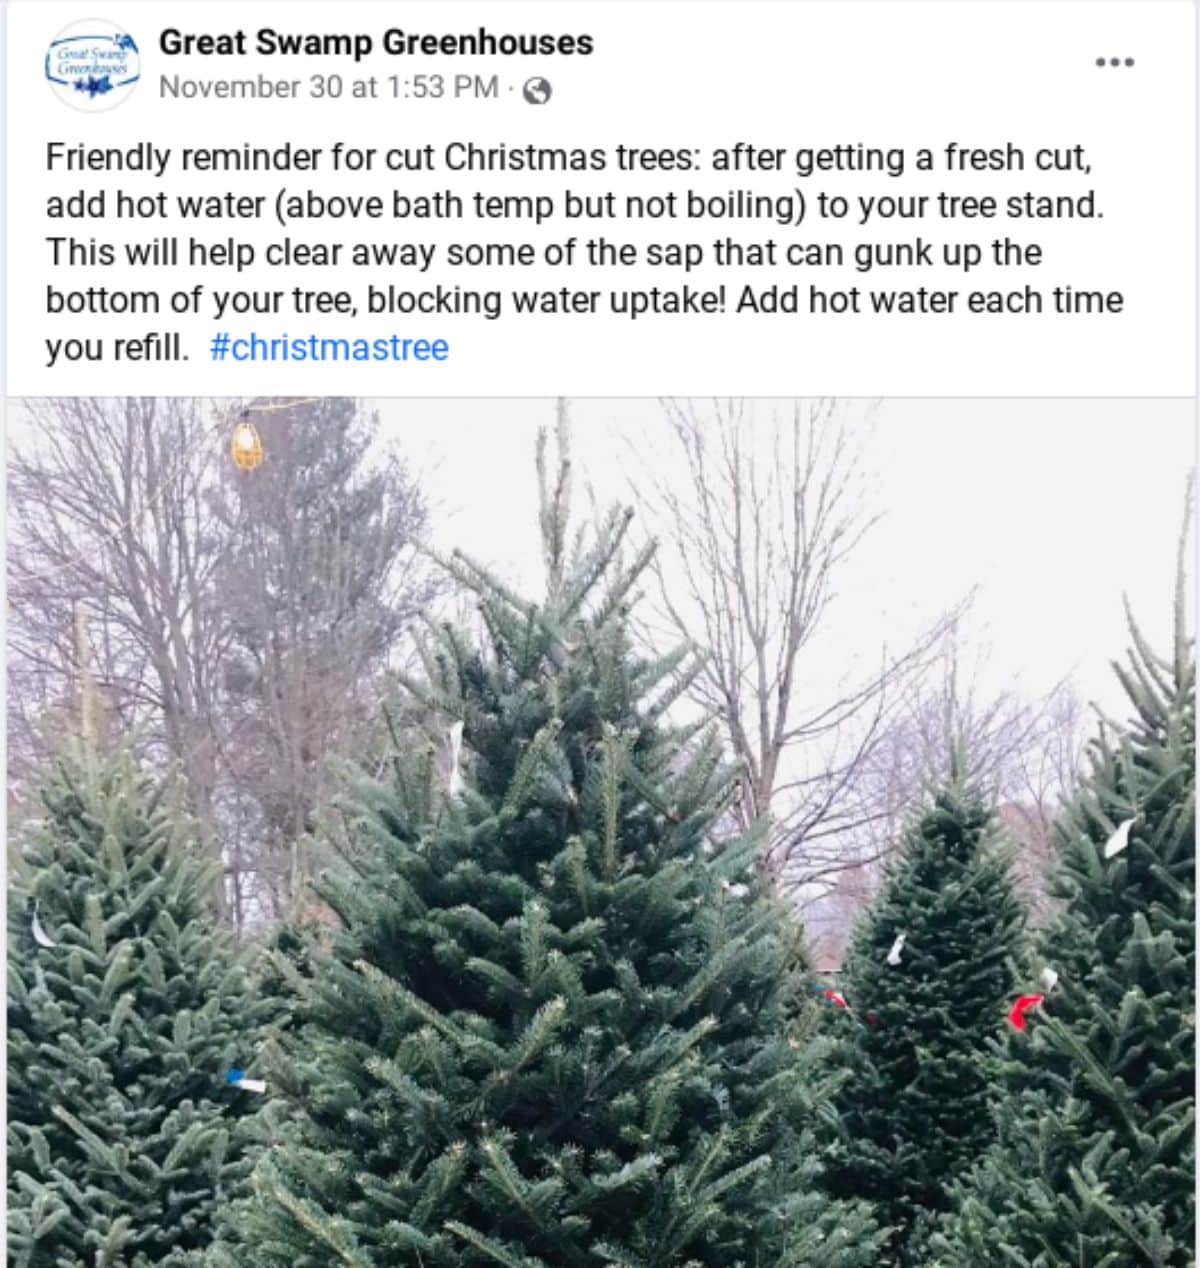 A social media post from a Christmas tree farm